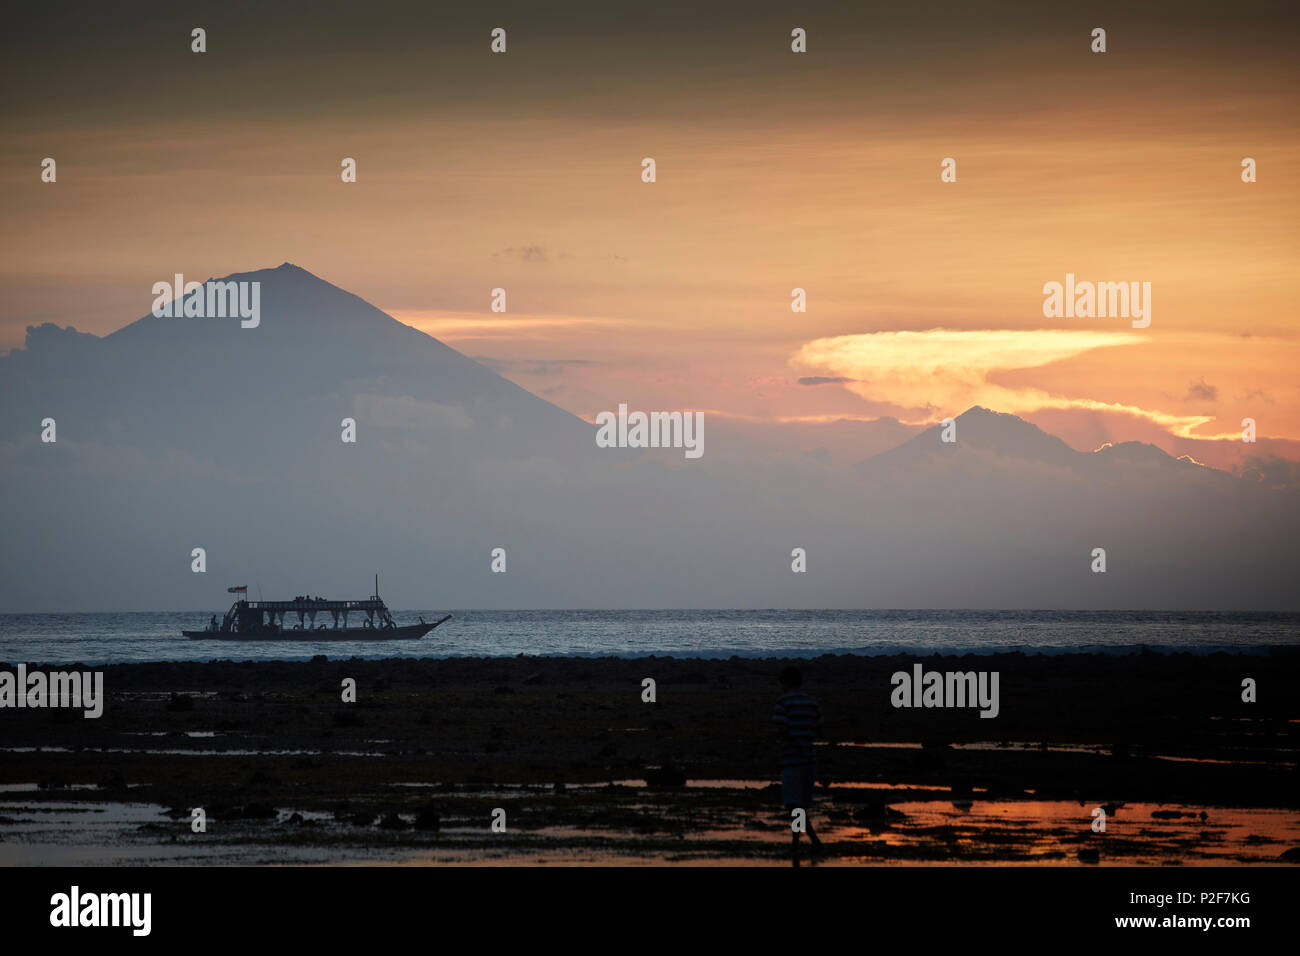 Sunset, view of Bali and the volcanoes Agung and Batur, Gili Trawangan, Lombok, Indonesia Stock Photo